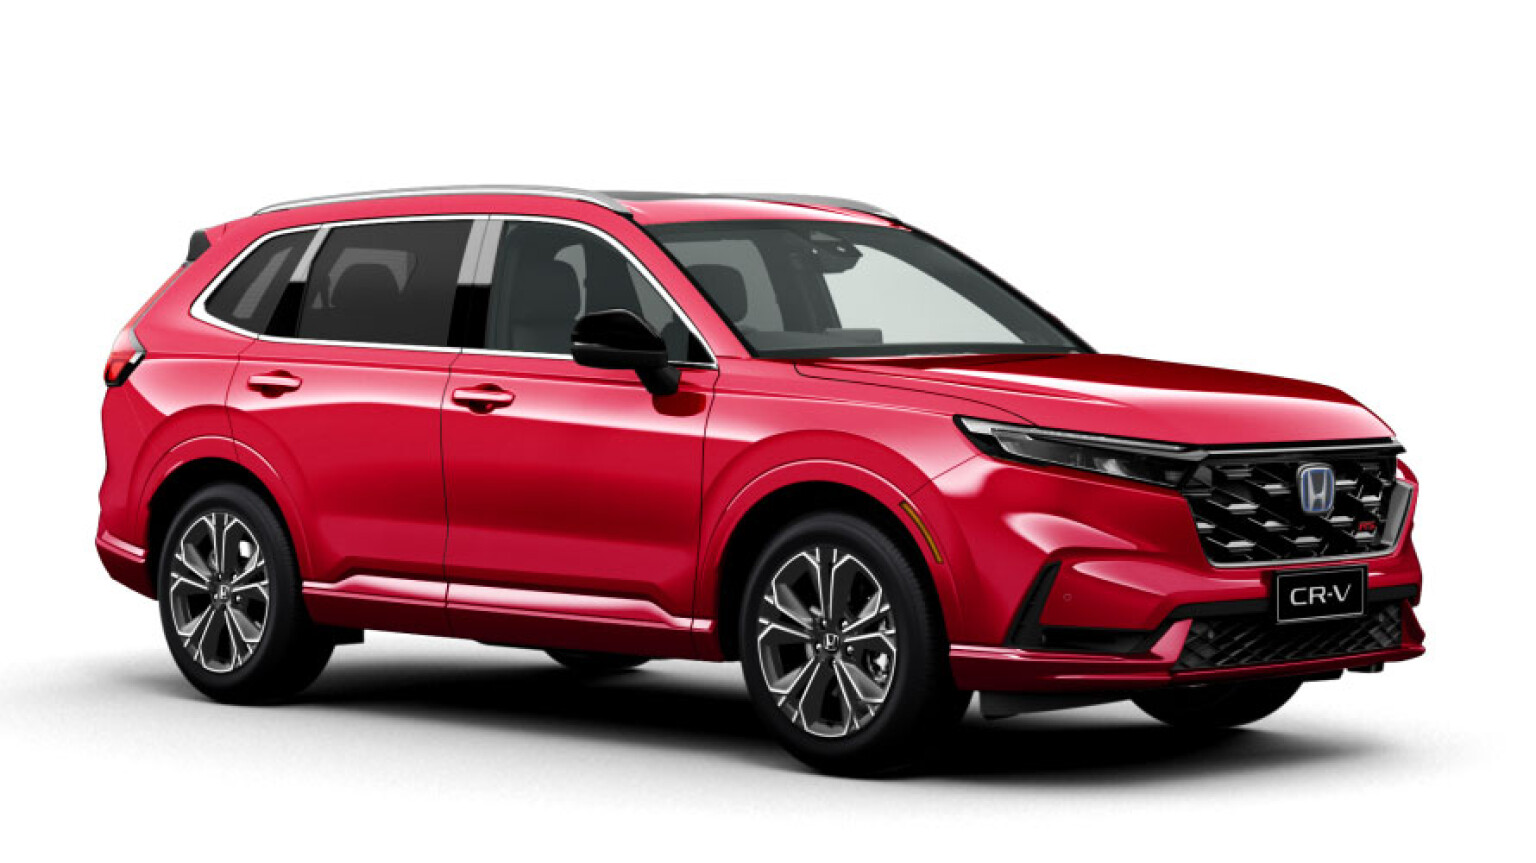 New Honda CR-V Price & Specs Officially Confirmed